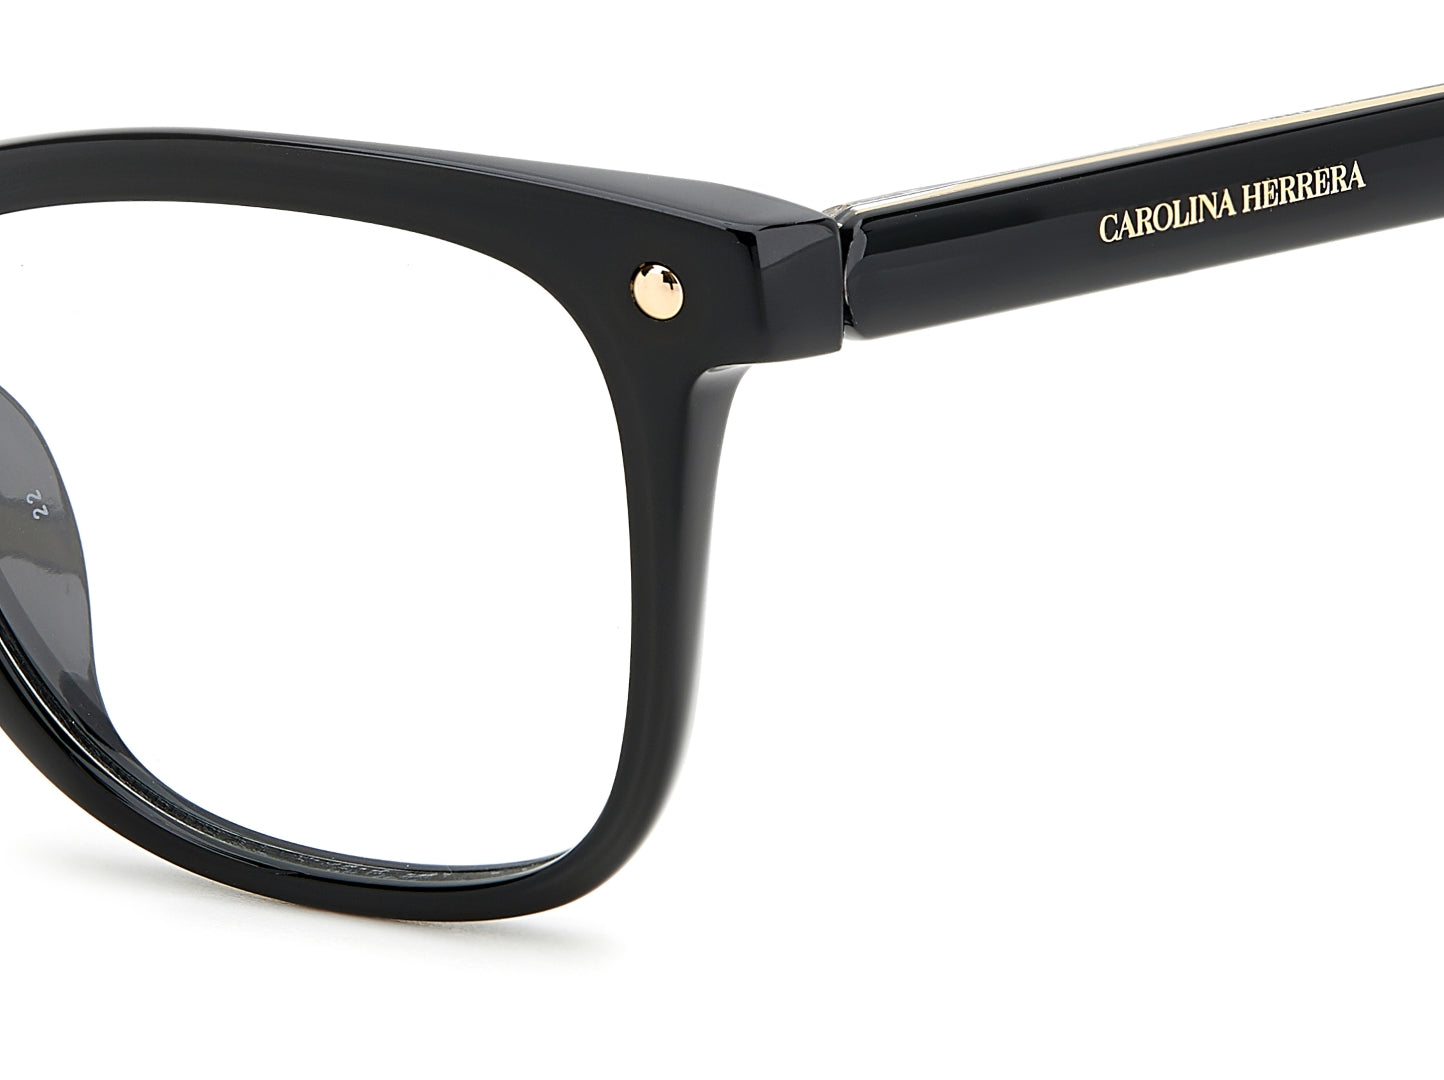 Carolina Herrera Woman Rectangular Eyeglasses